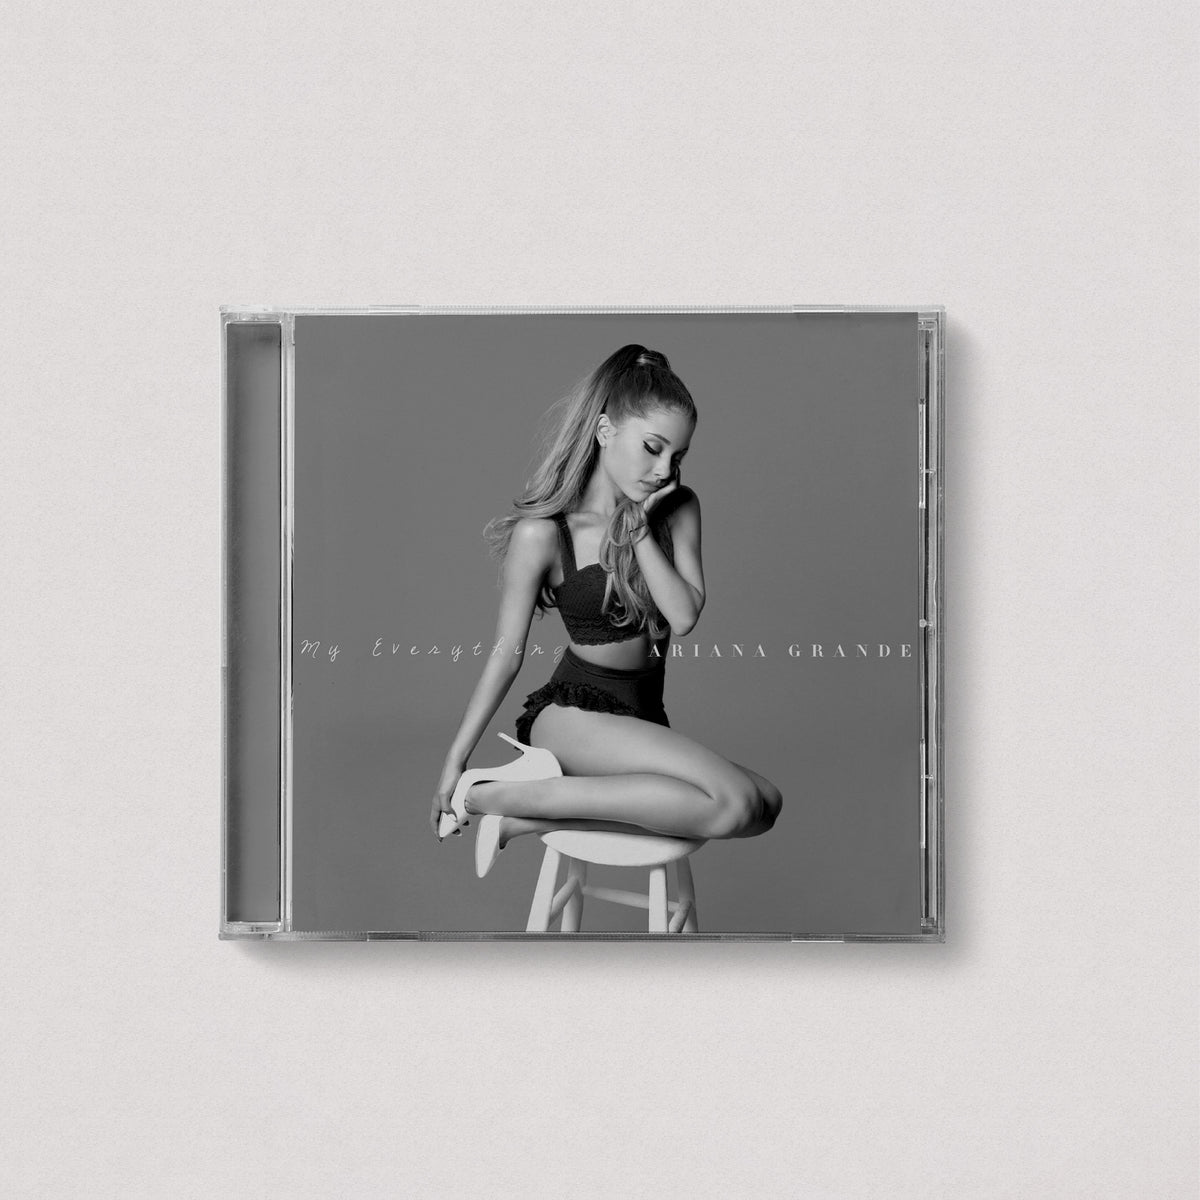 Ariana Grande - My Everything (Standard, CD)